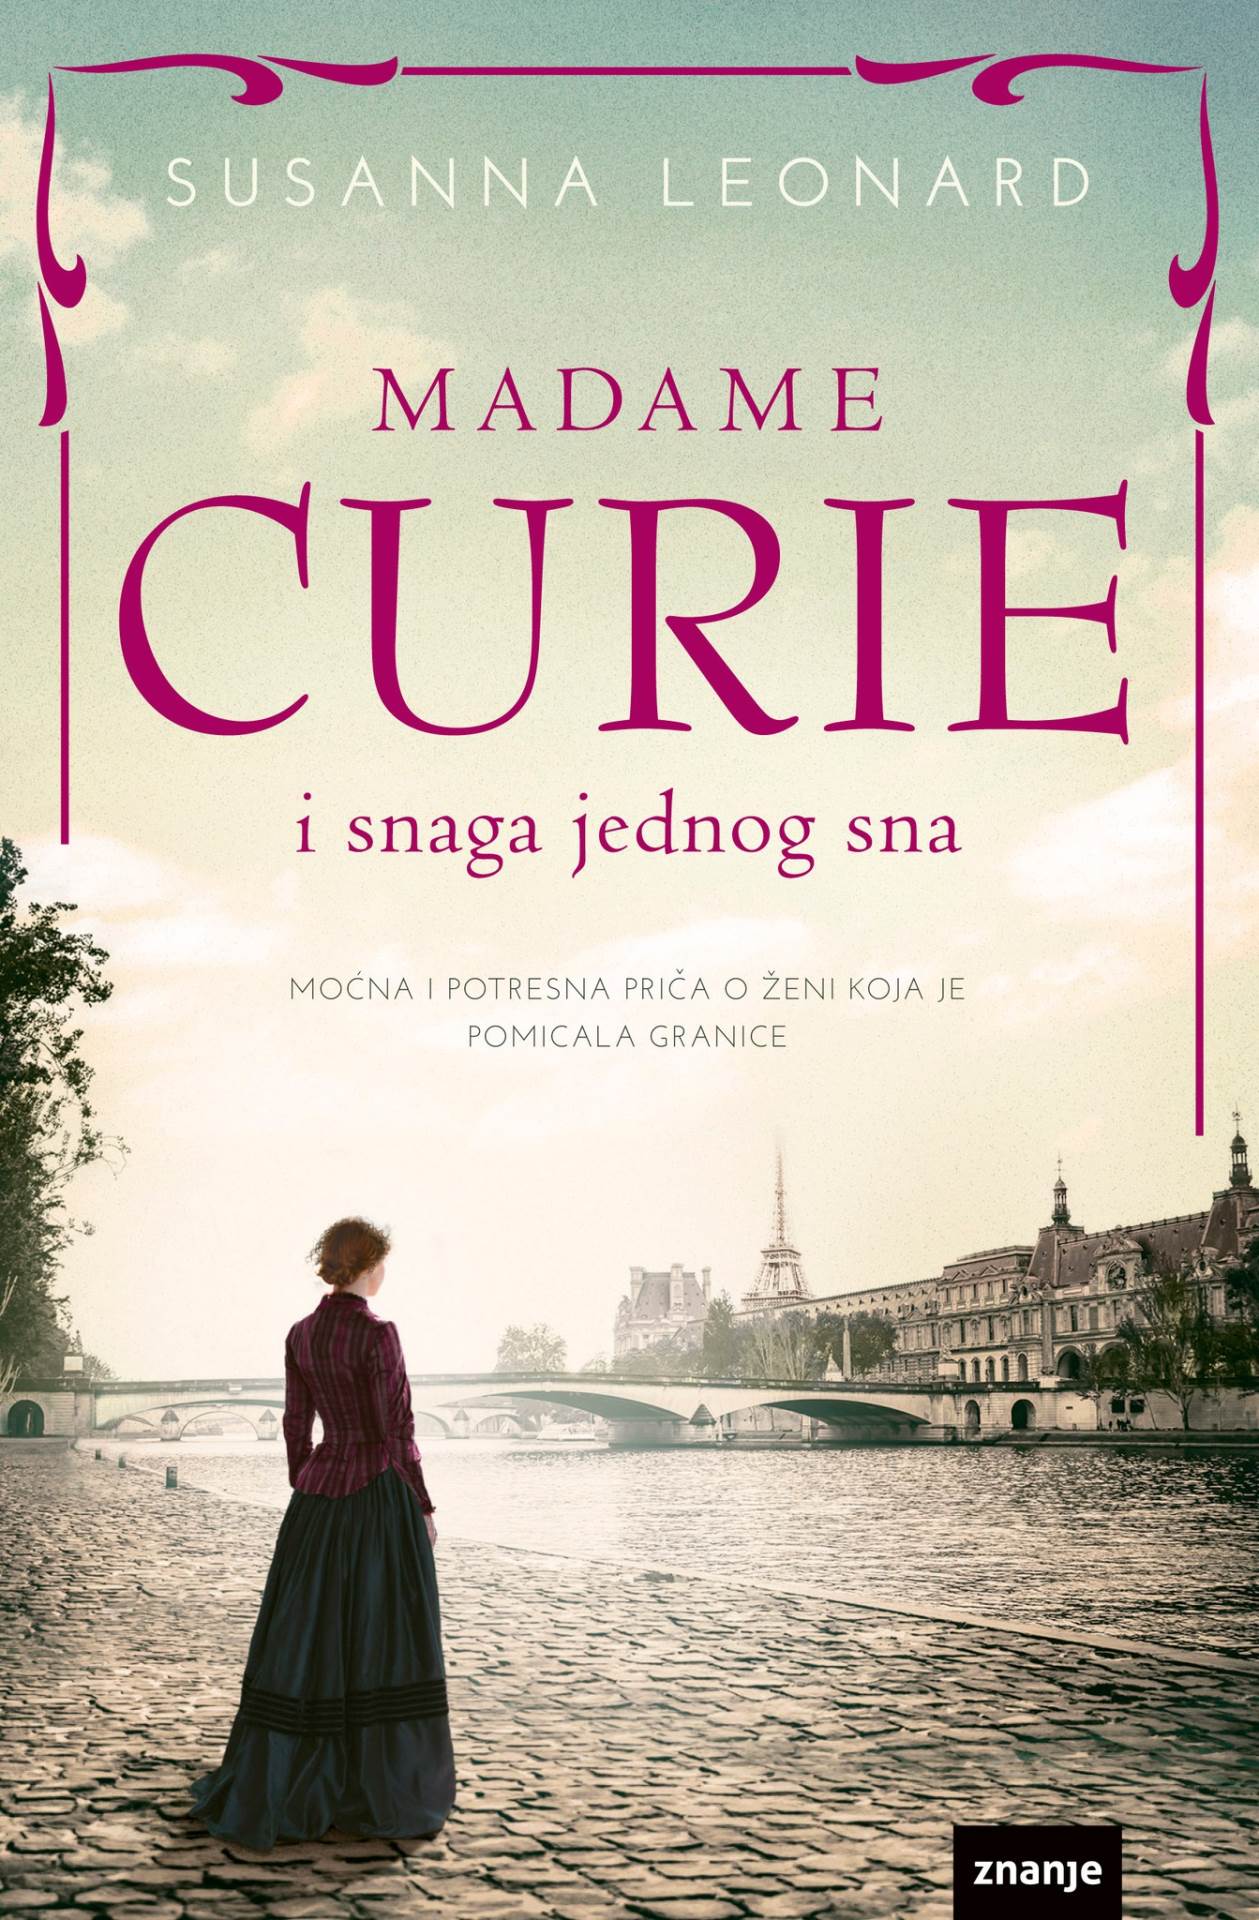 Madame Curie.jpg